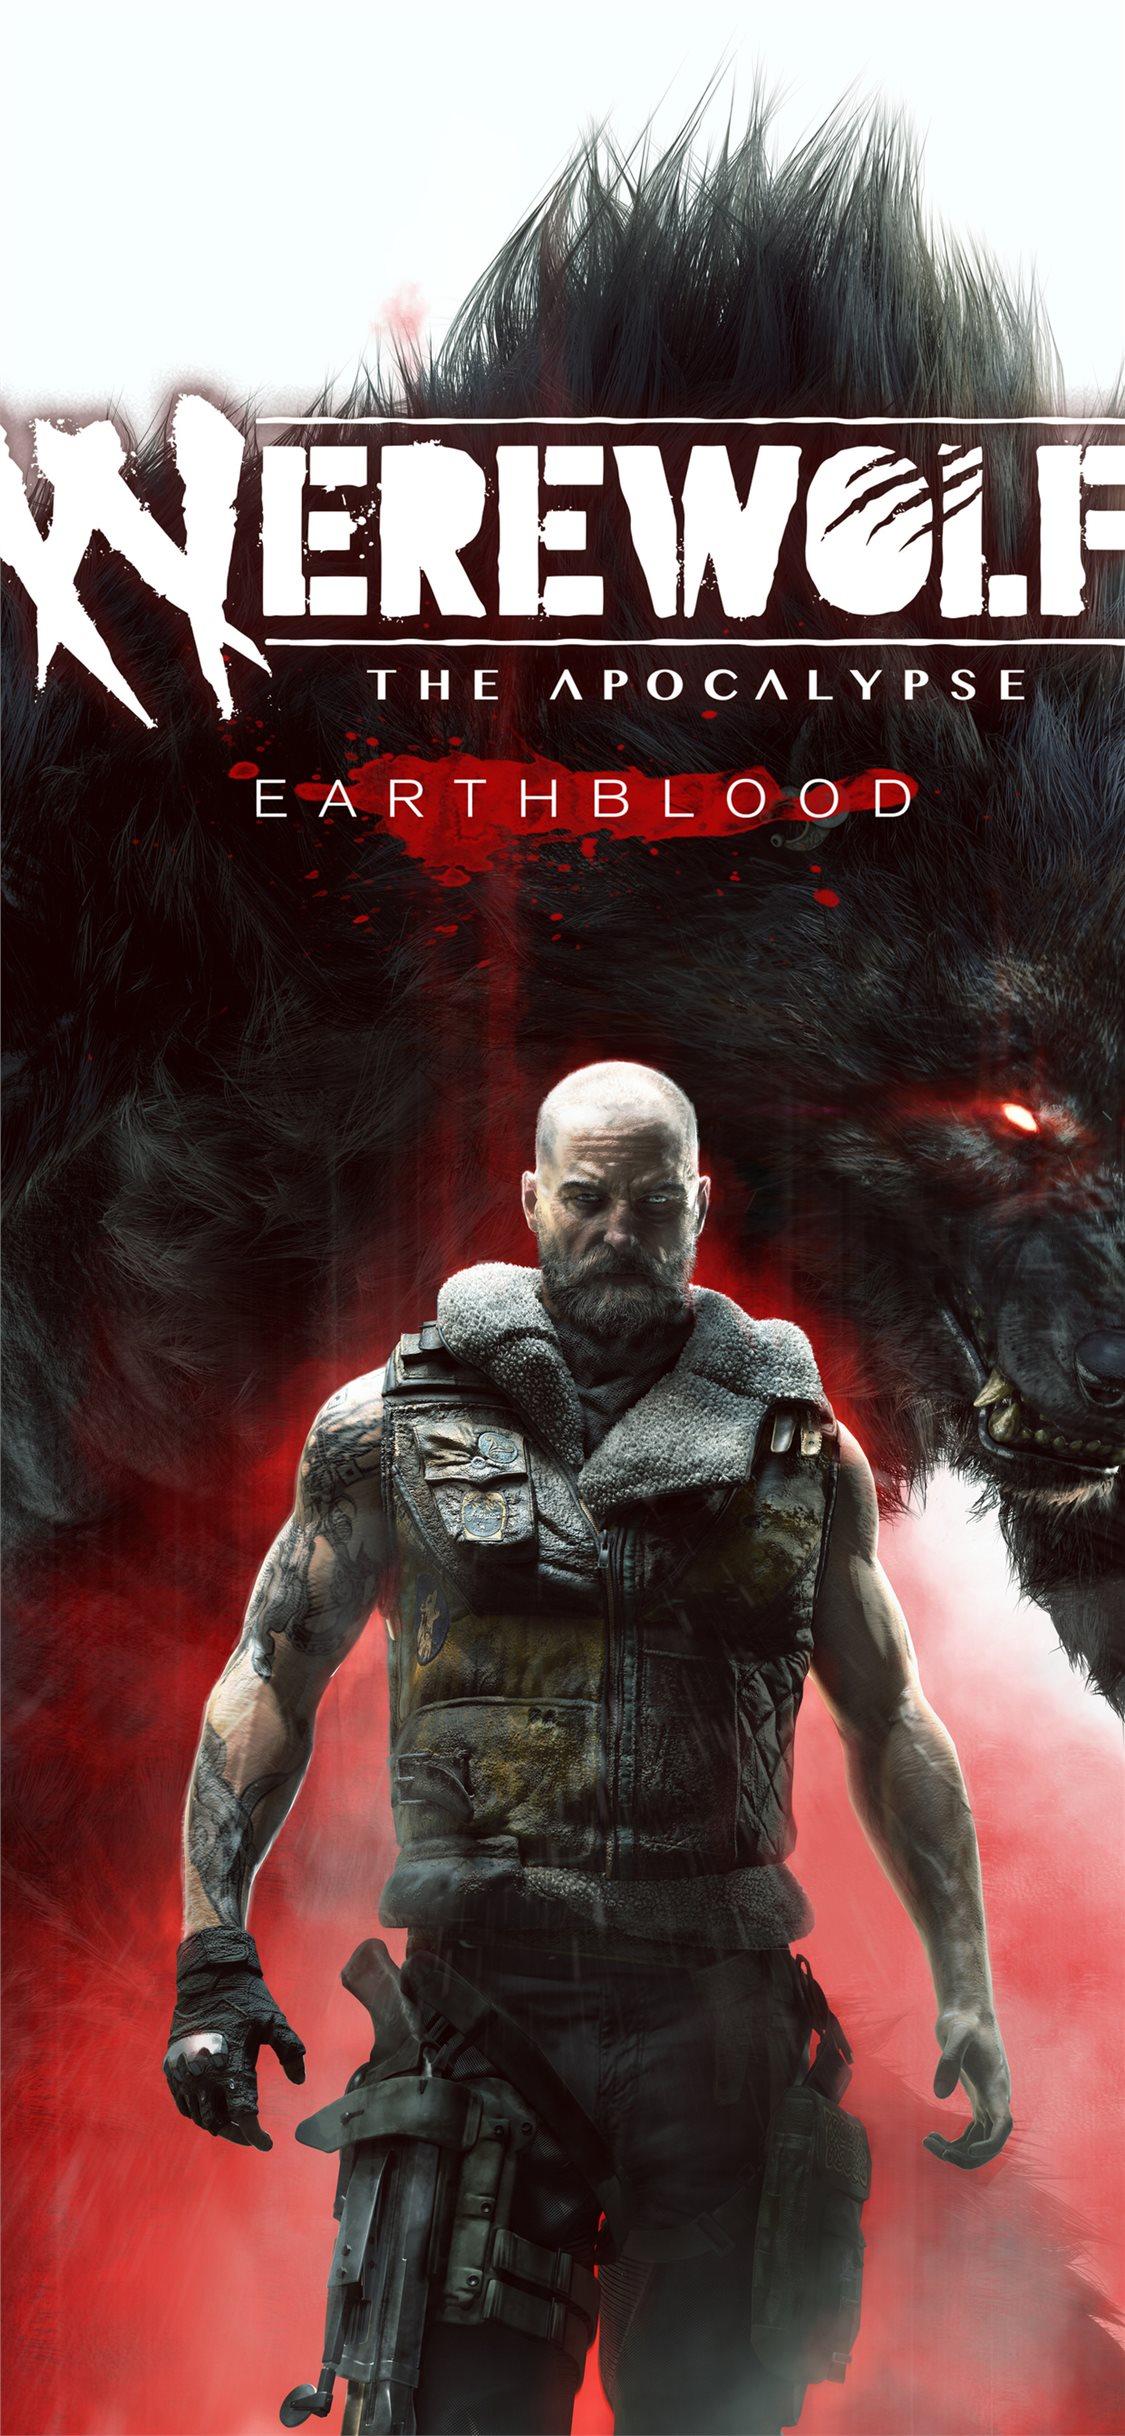 werewolf the apocalypse earthblood 2020 4k iPhone X